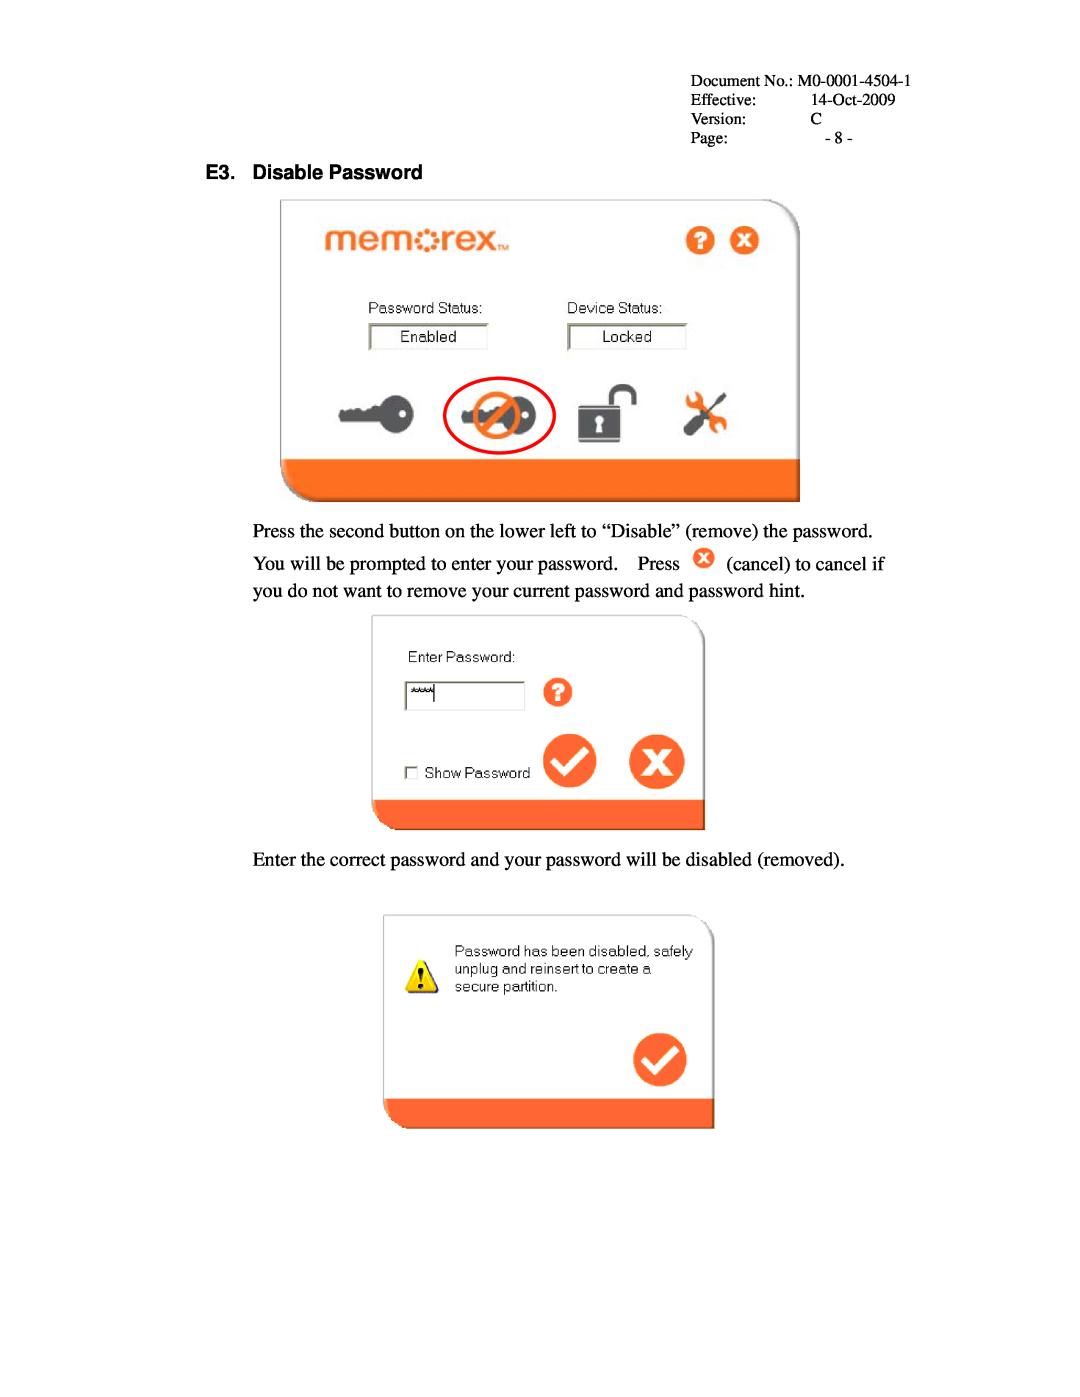 Memorex c user manual E3. Disable Password 